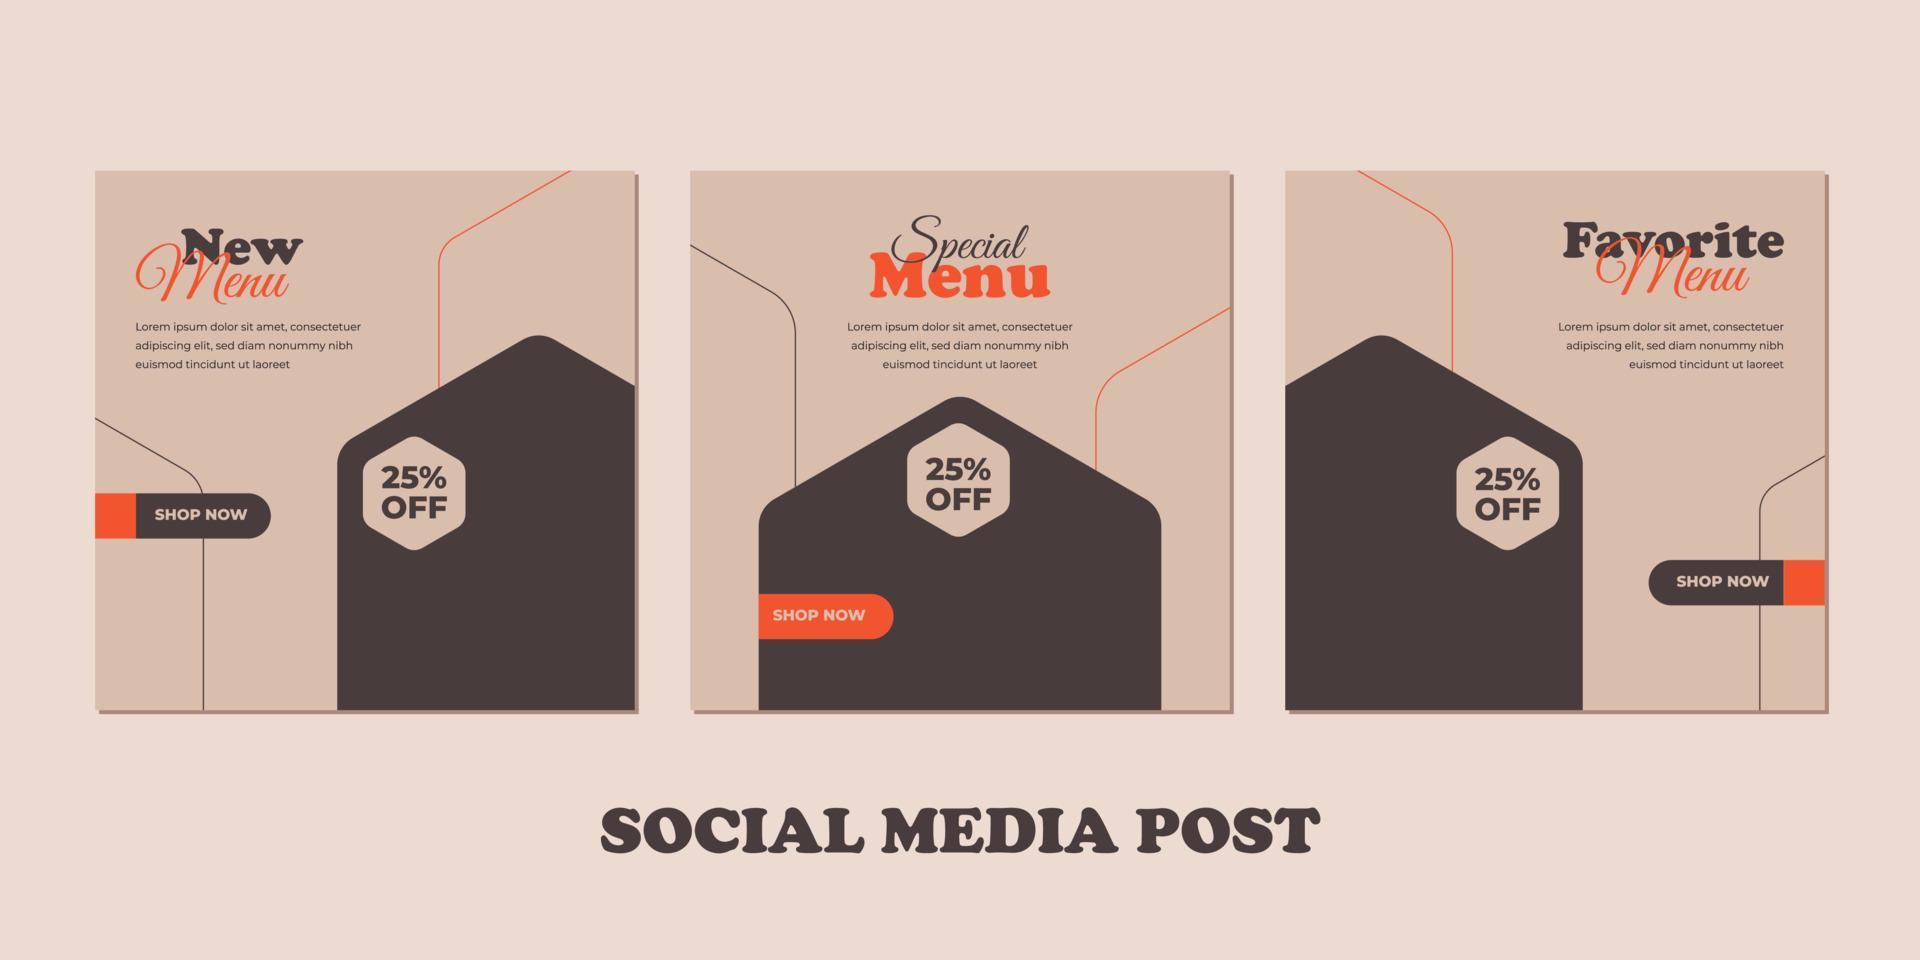 Food menu banner social media post. templates for promotions on the Food menu. Set of social media story and post frames. Layout design for marketing on social media. vector